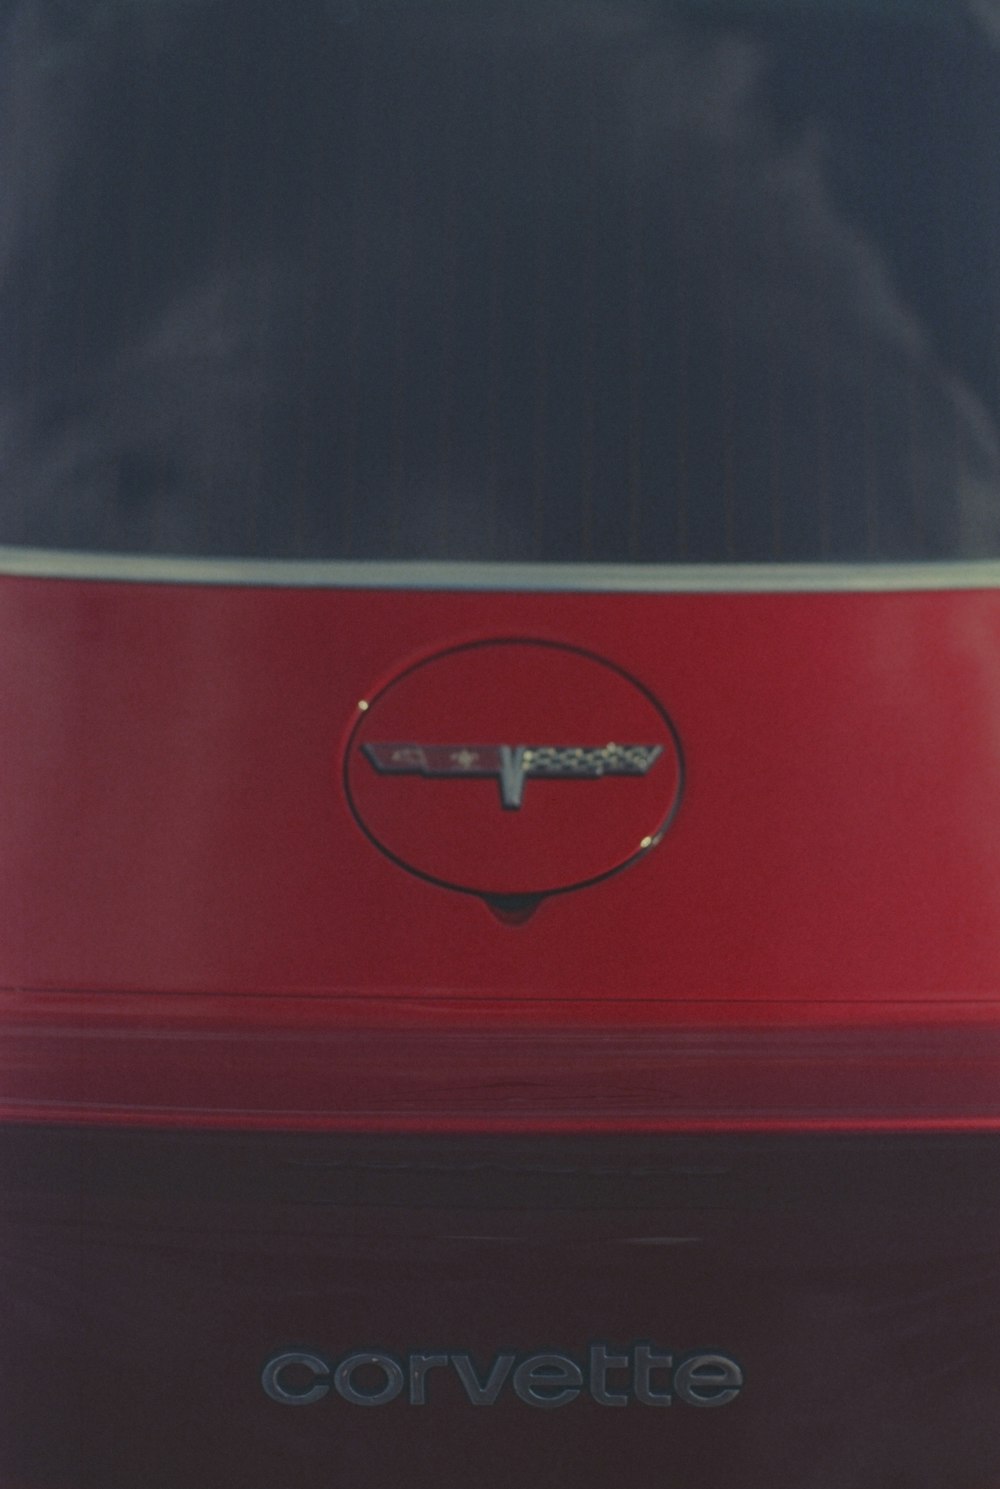 Un objeto rectangular rojo con un círculo negro